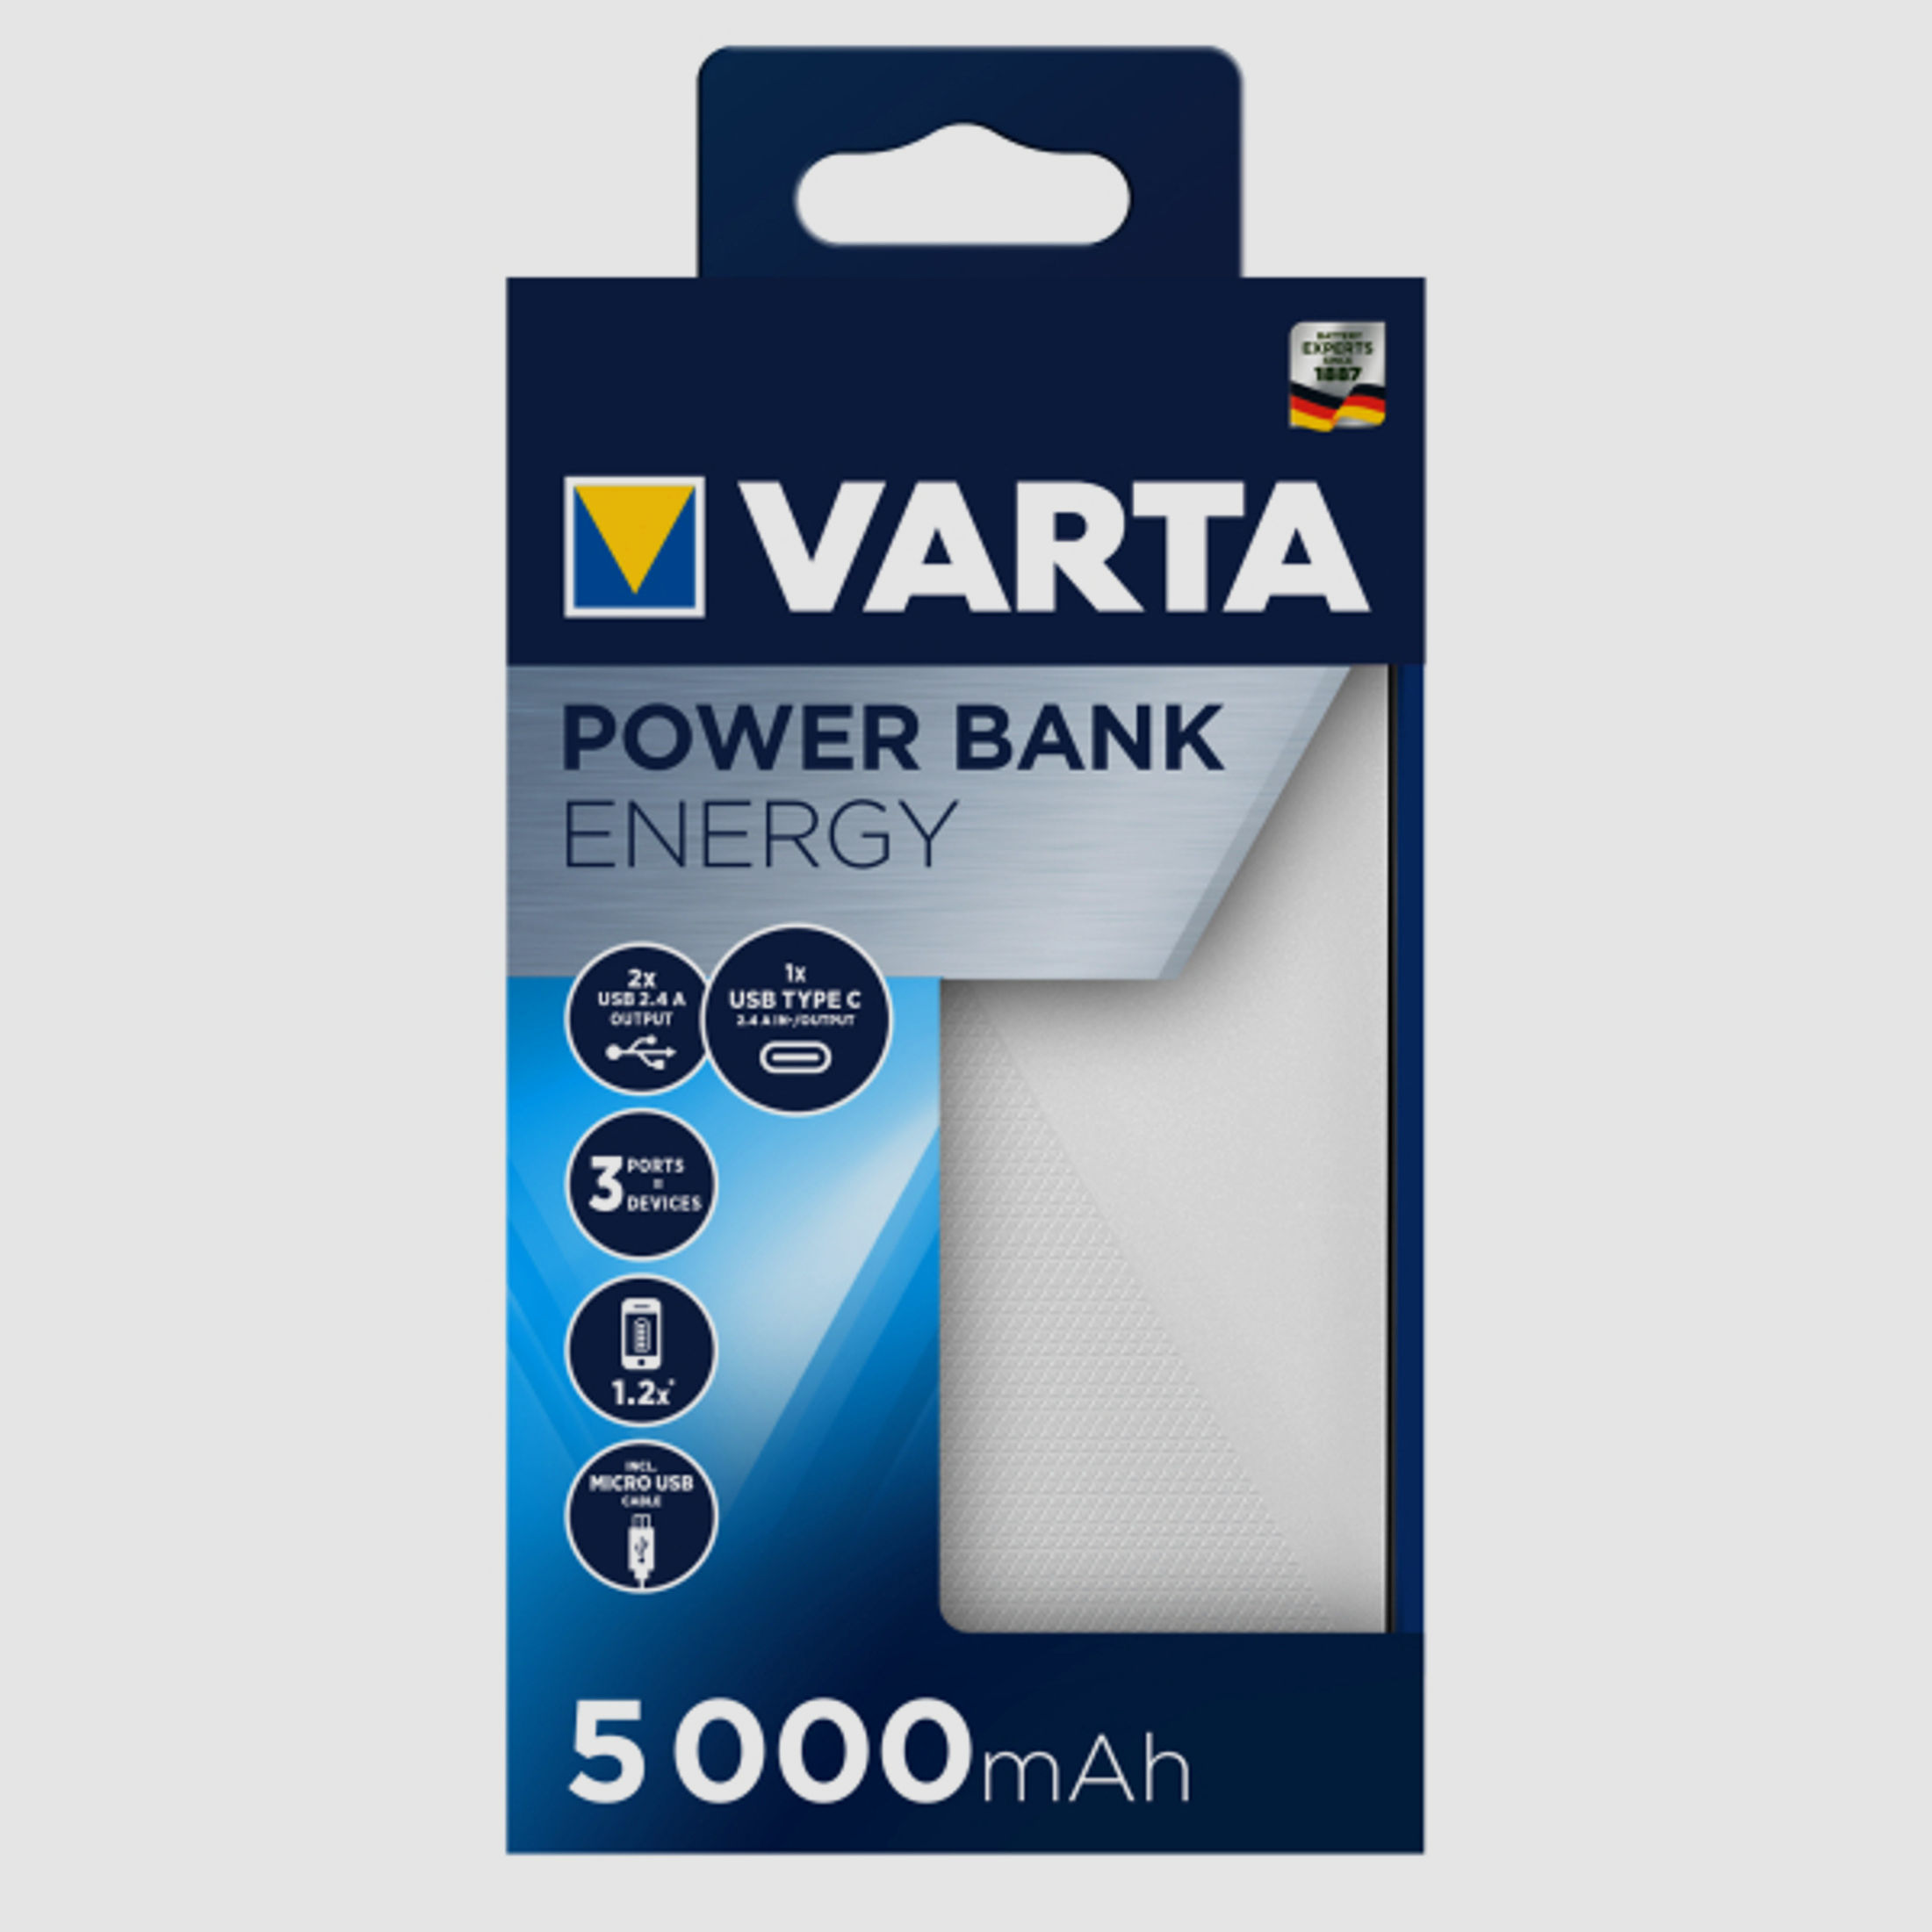 VARTA 57975 101 111 Power Bank Energy 5000mAh inkl. Cable | für Wärmebild Nachtsicht Taschenlampe ..